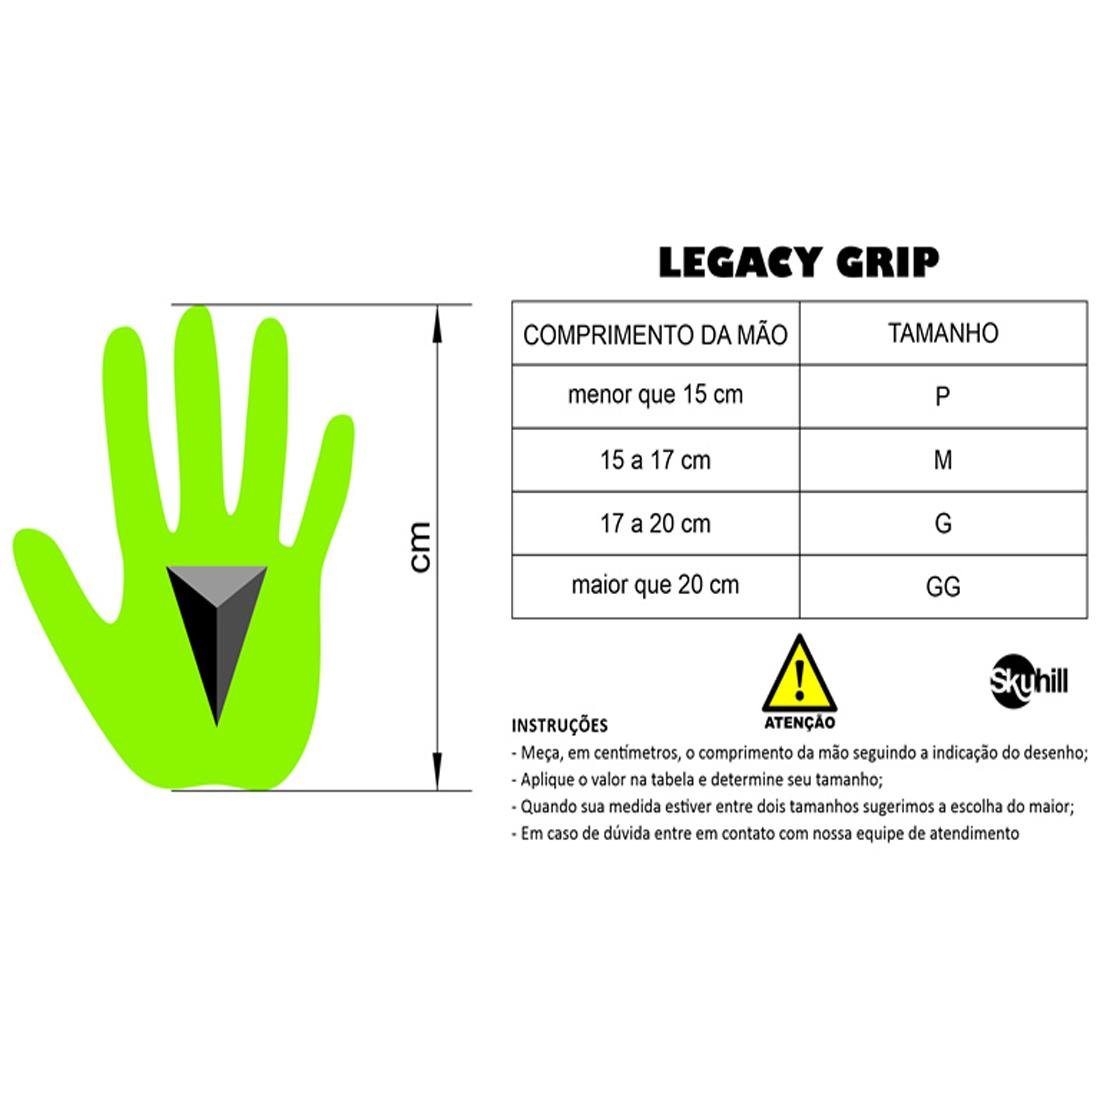 Hand Grip Legacy Power Colors Neopreme Skyhill - Pink - M - 3